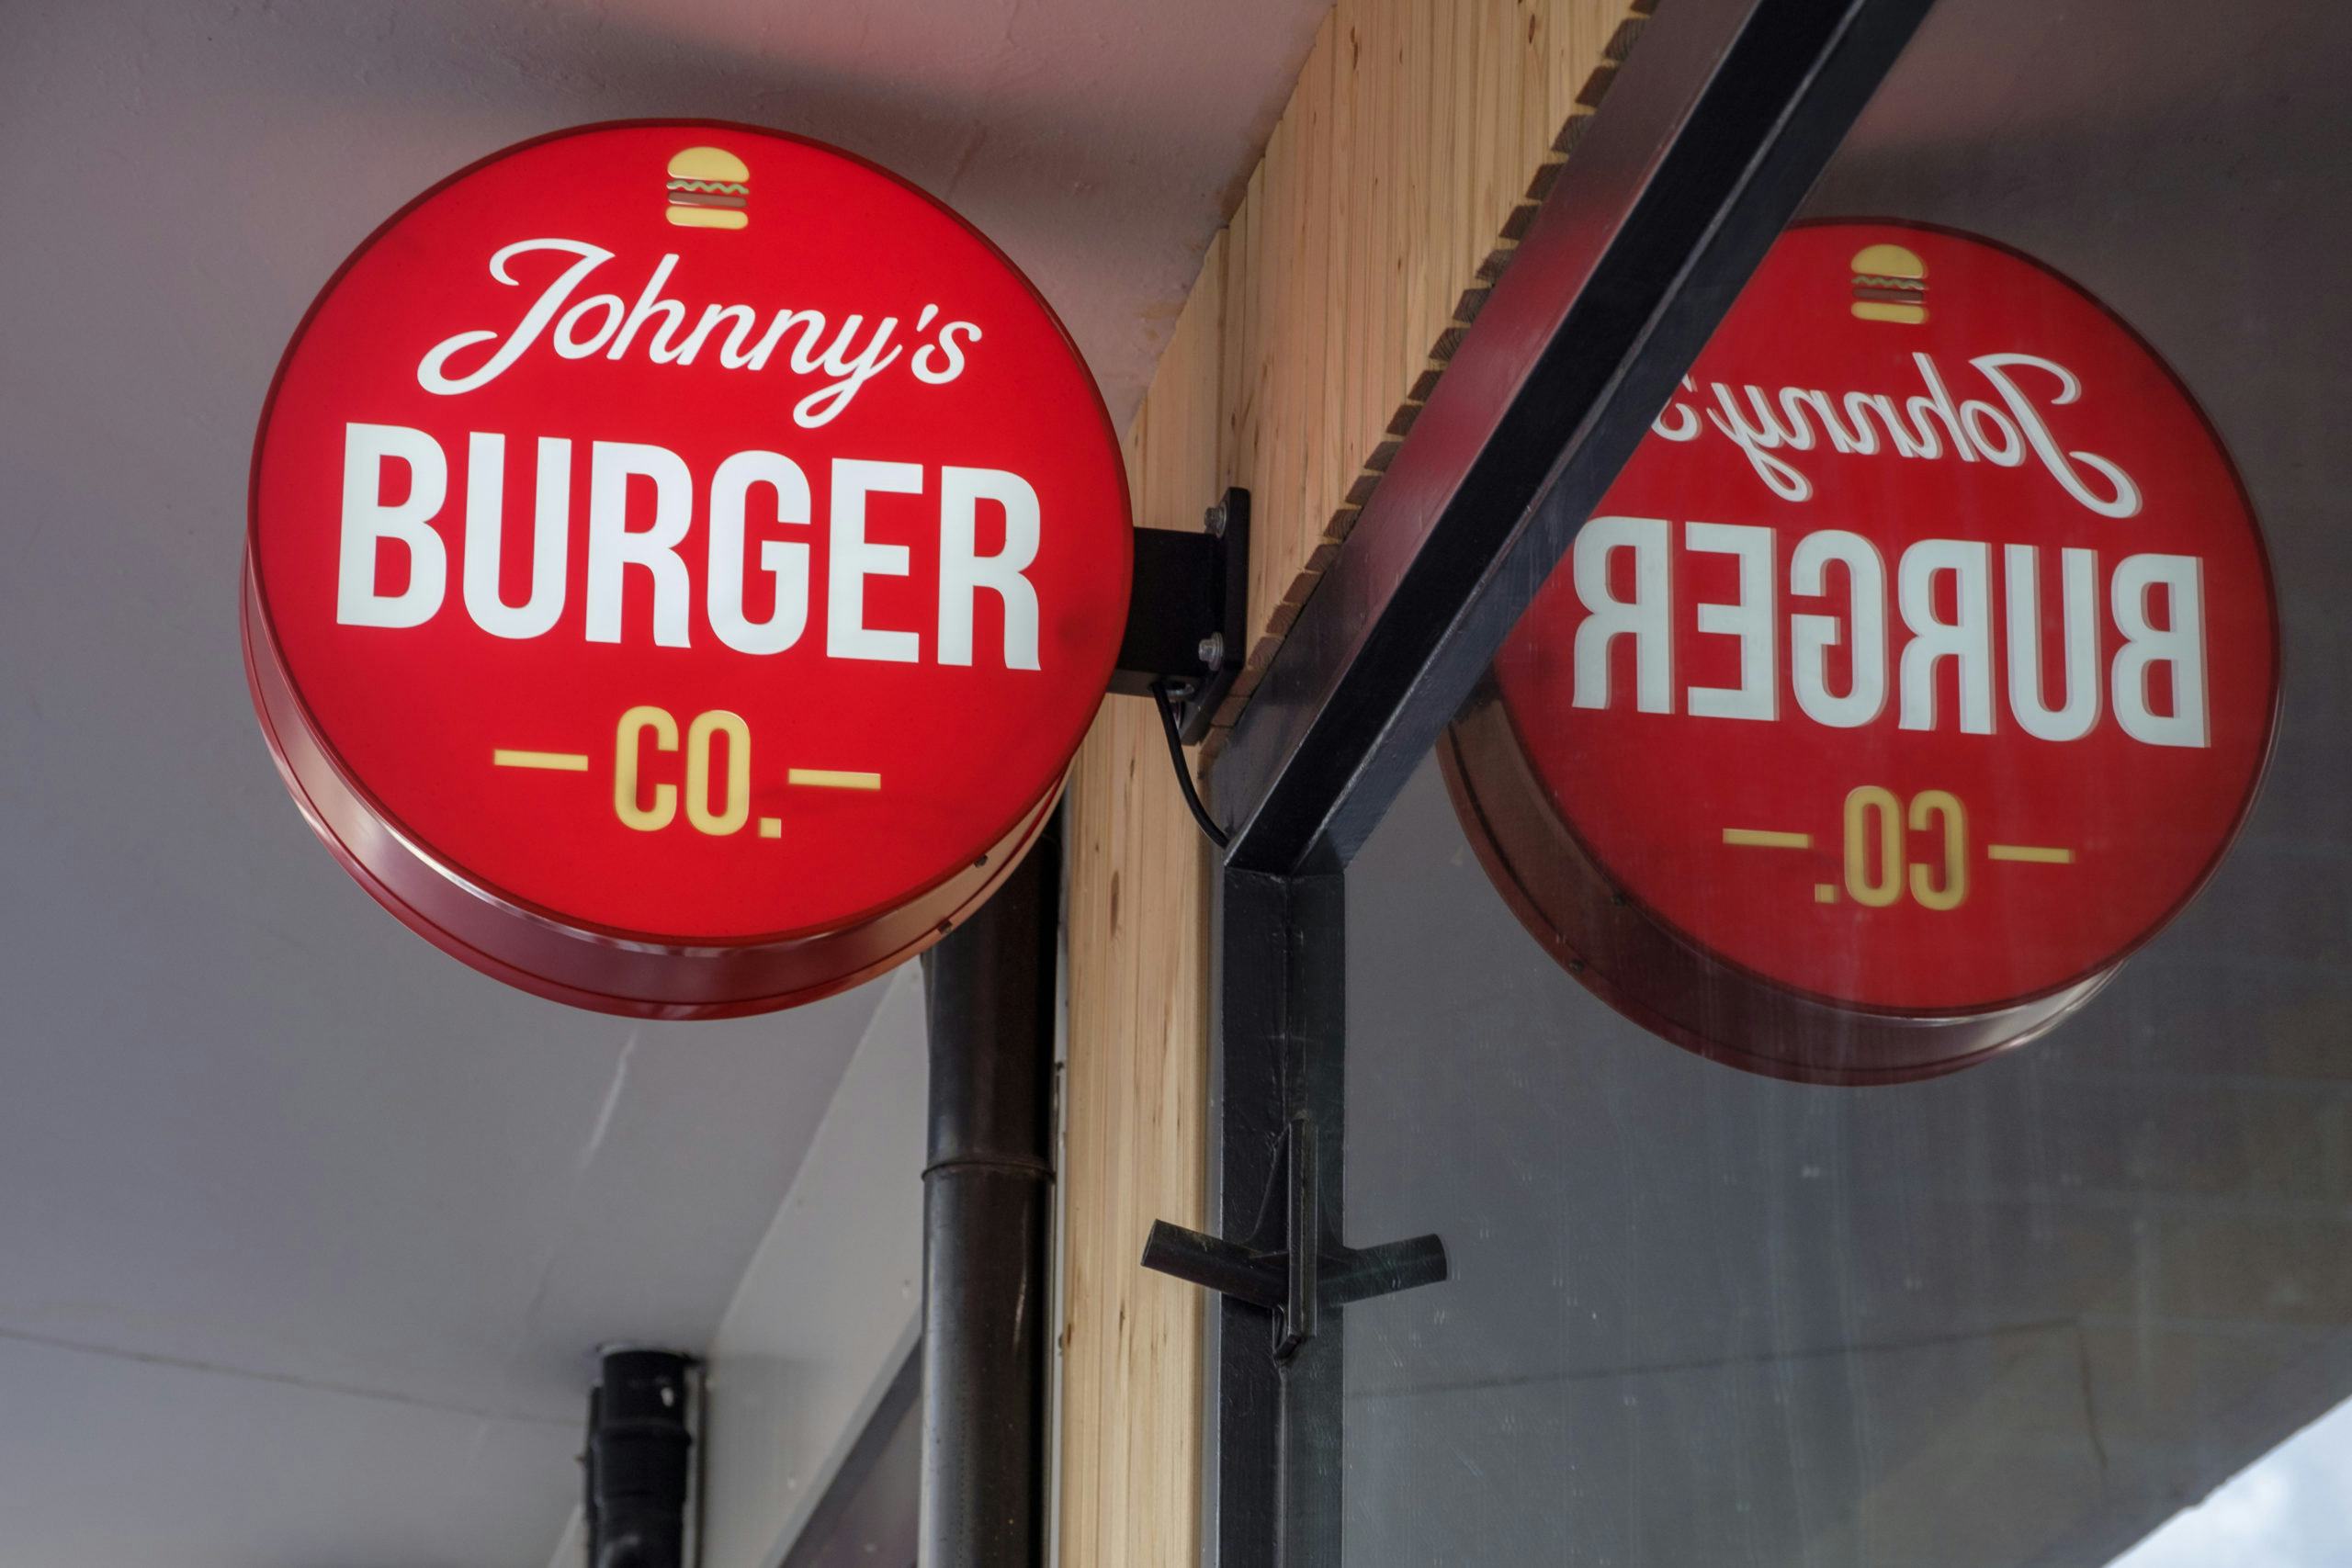 Domino's en Johnny's Burger Company delen pand